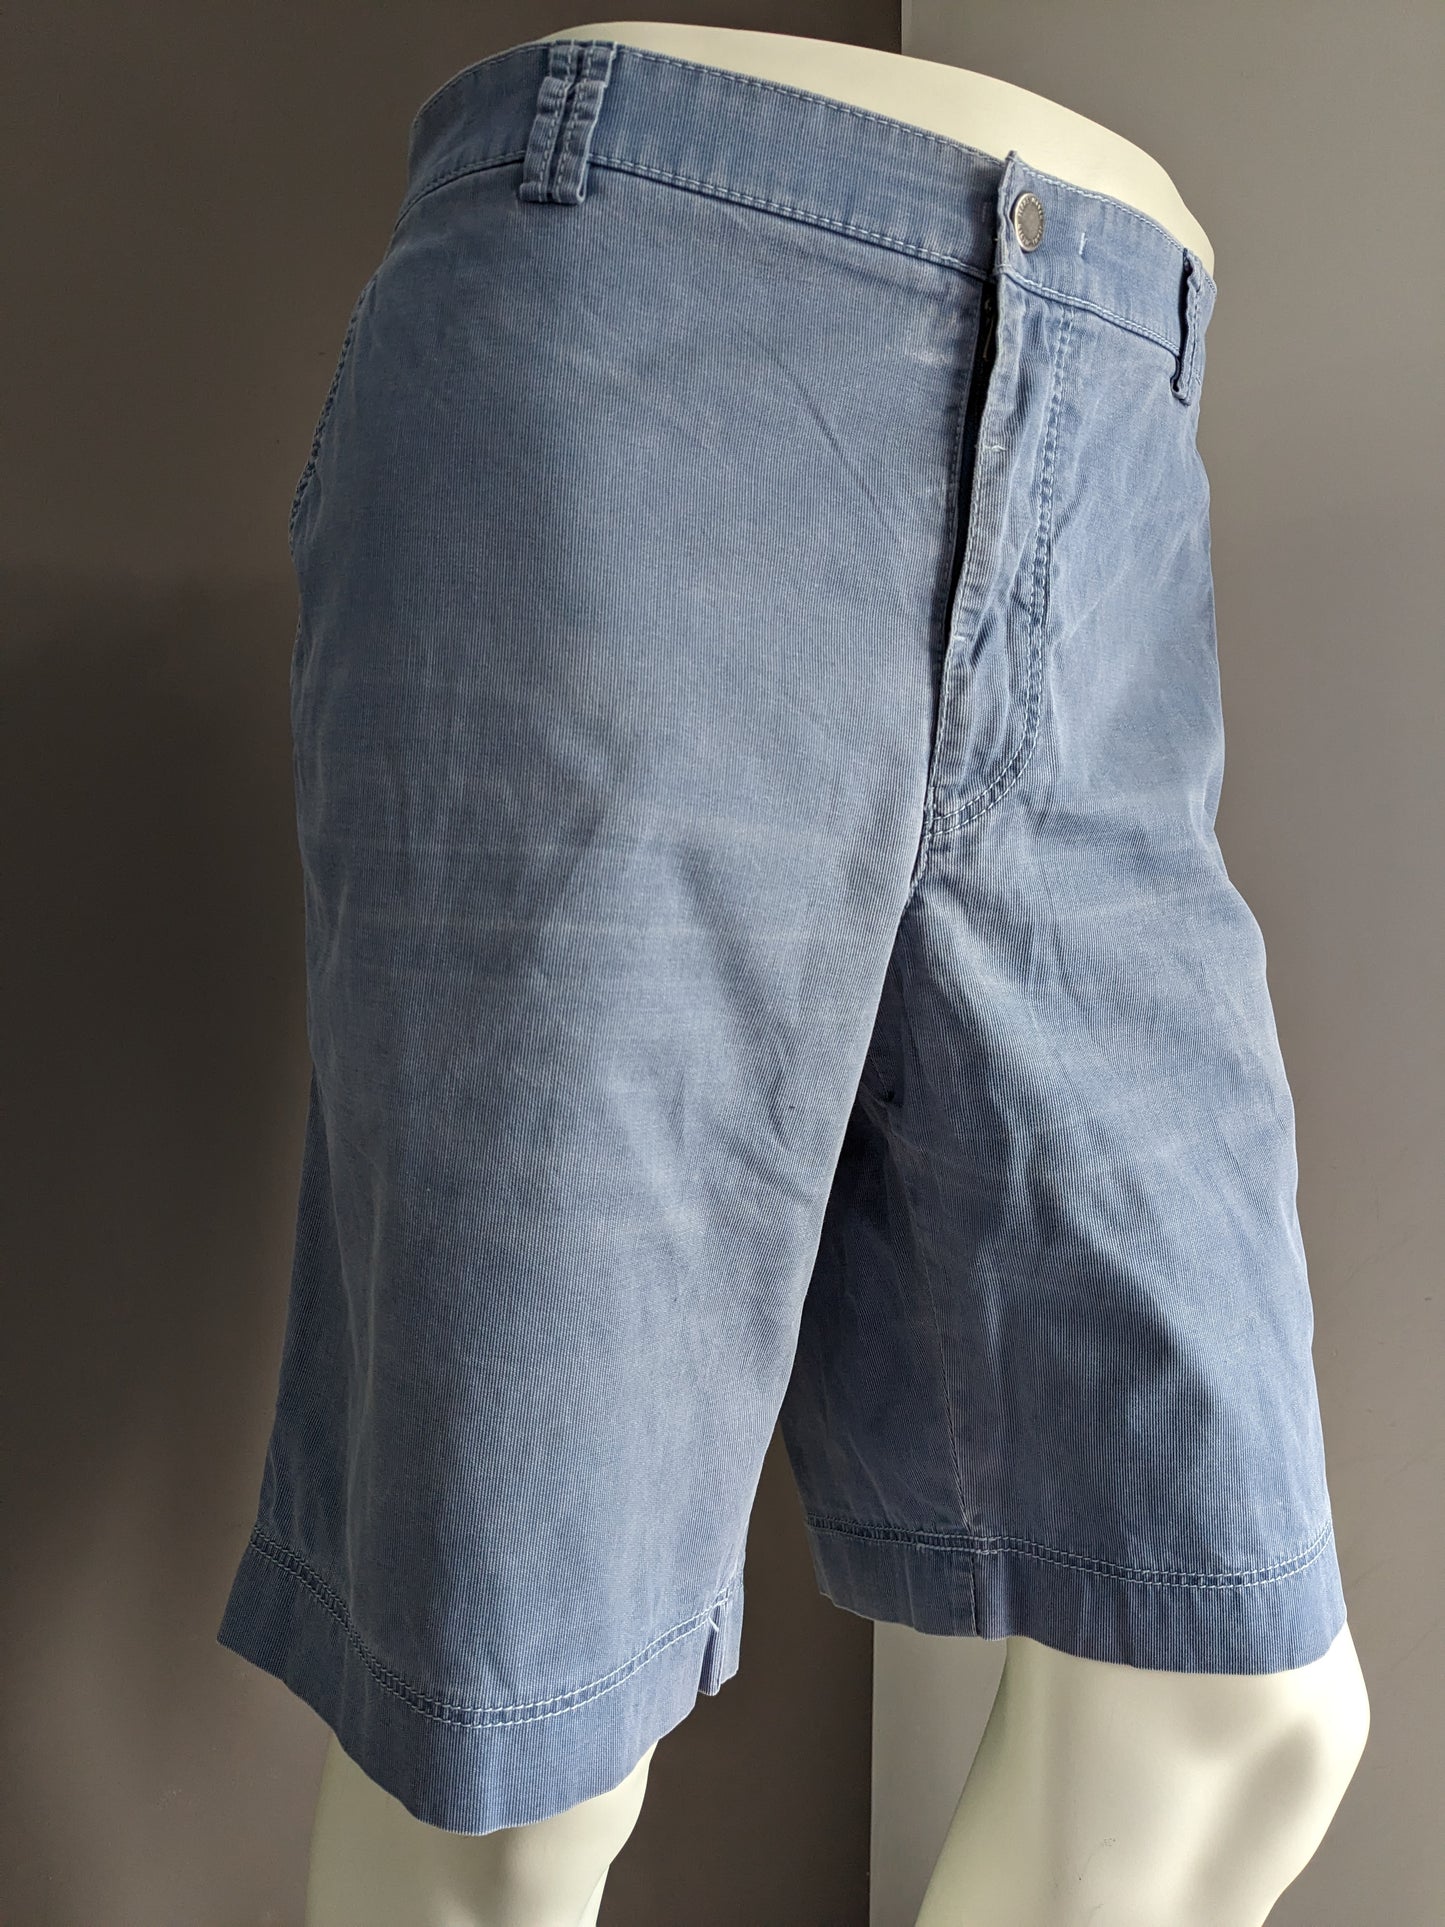 Shorts Meyer. Motivo a strisce blu. Dimensione 29 (58 / XL)